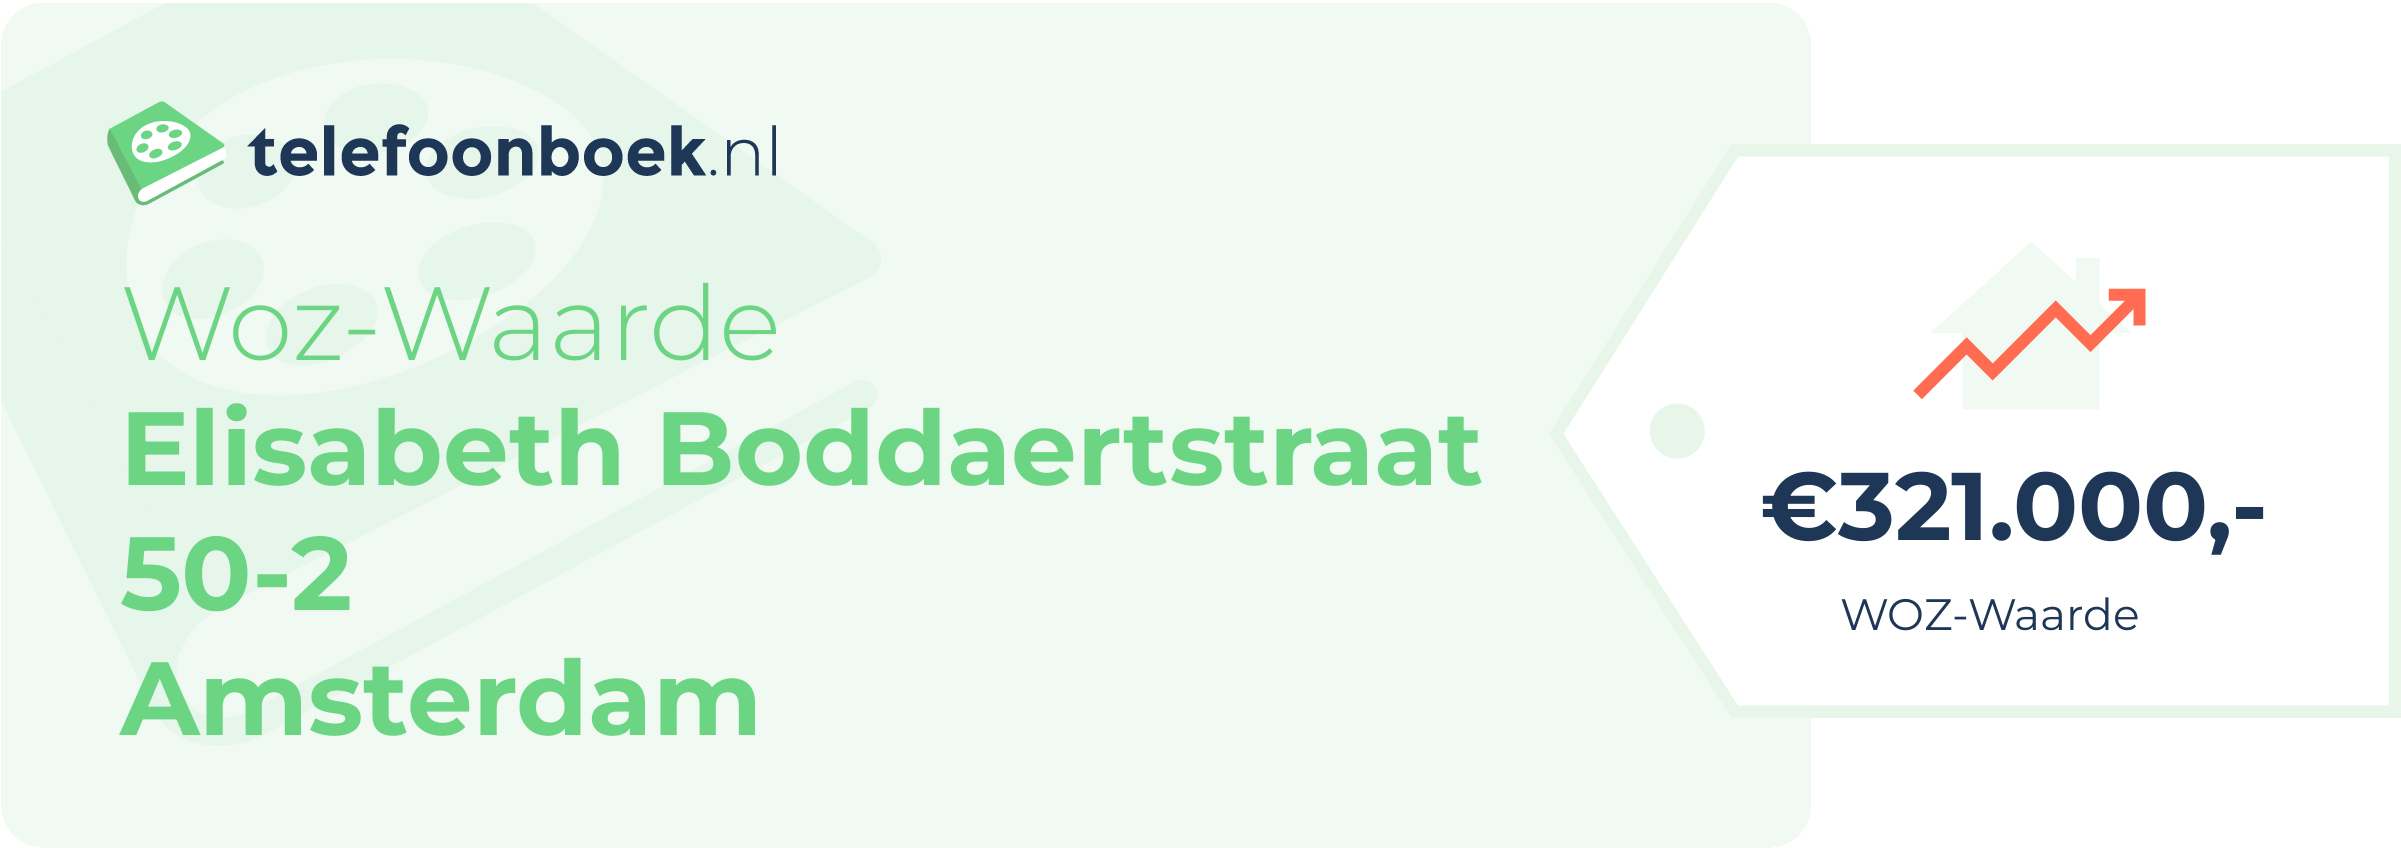 WOZ-waarde Elisabeth Boddaertstraat 50-2 Amsterdam